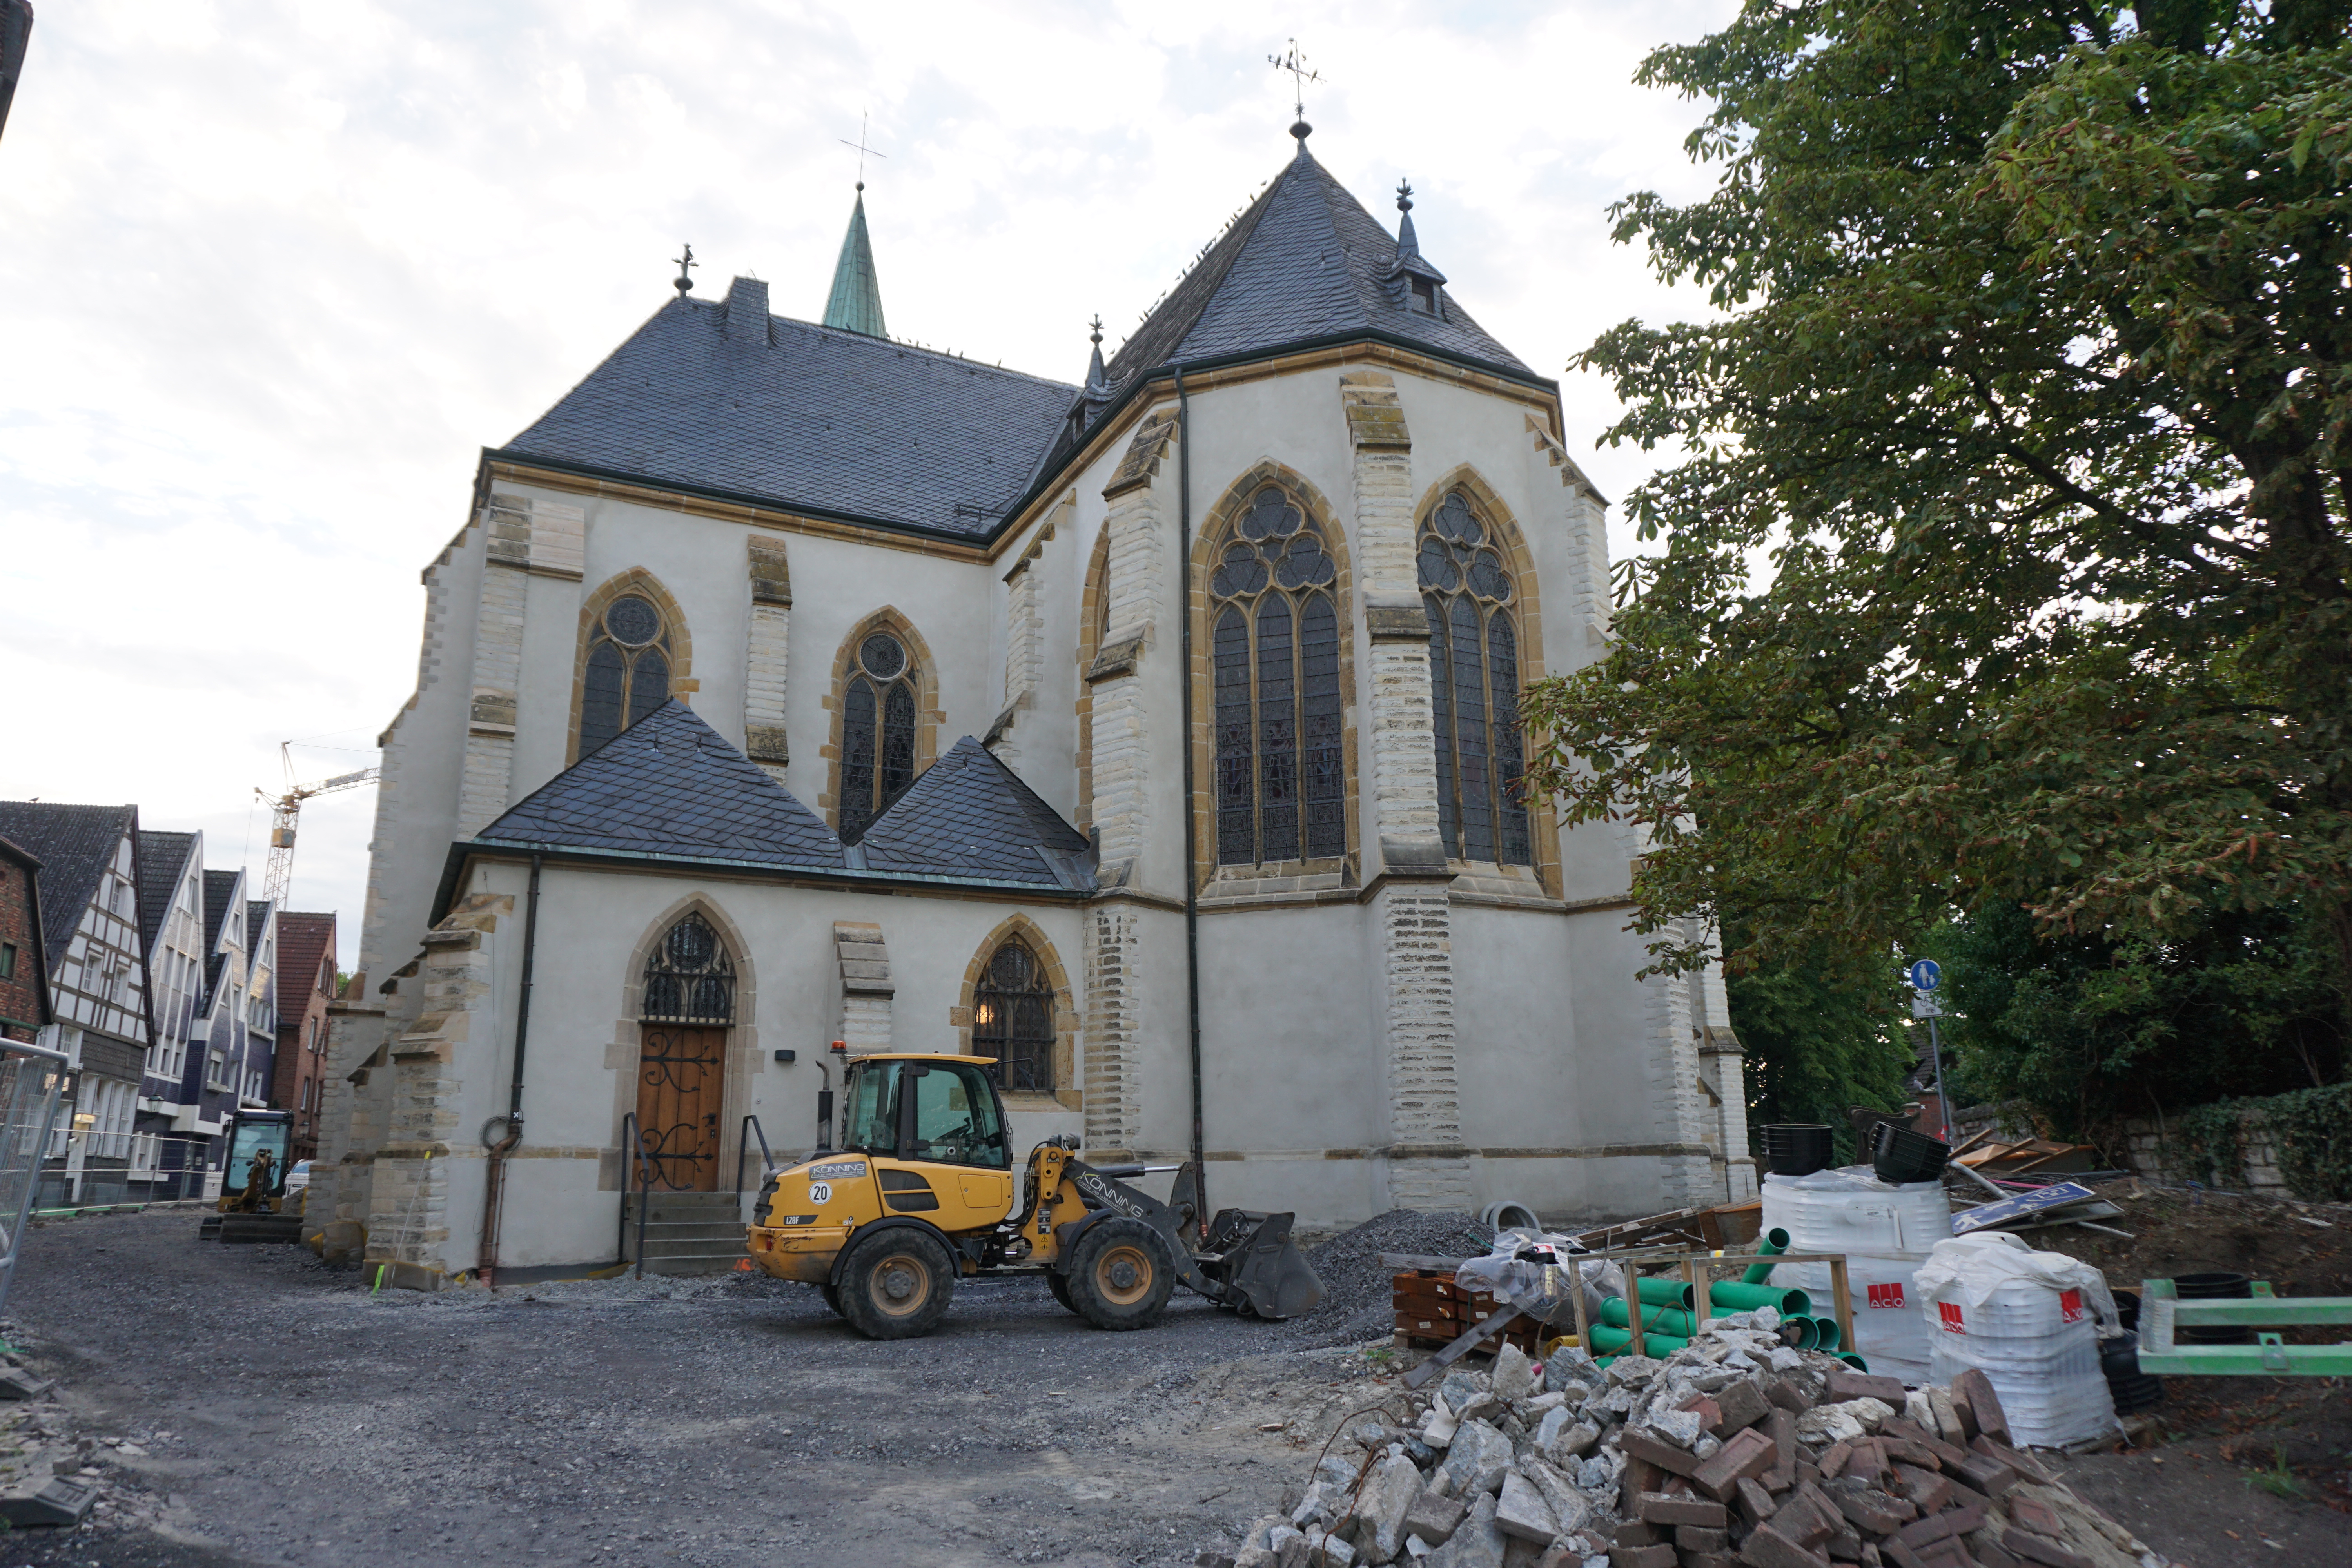 Kirche St. Jakobus Ennigerloh.
